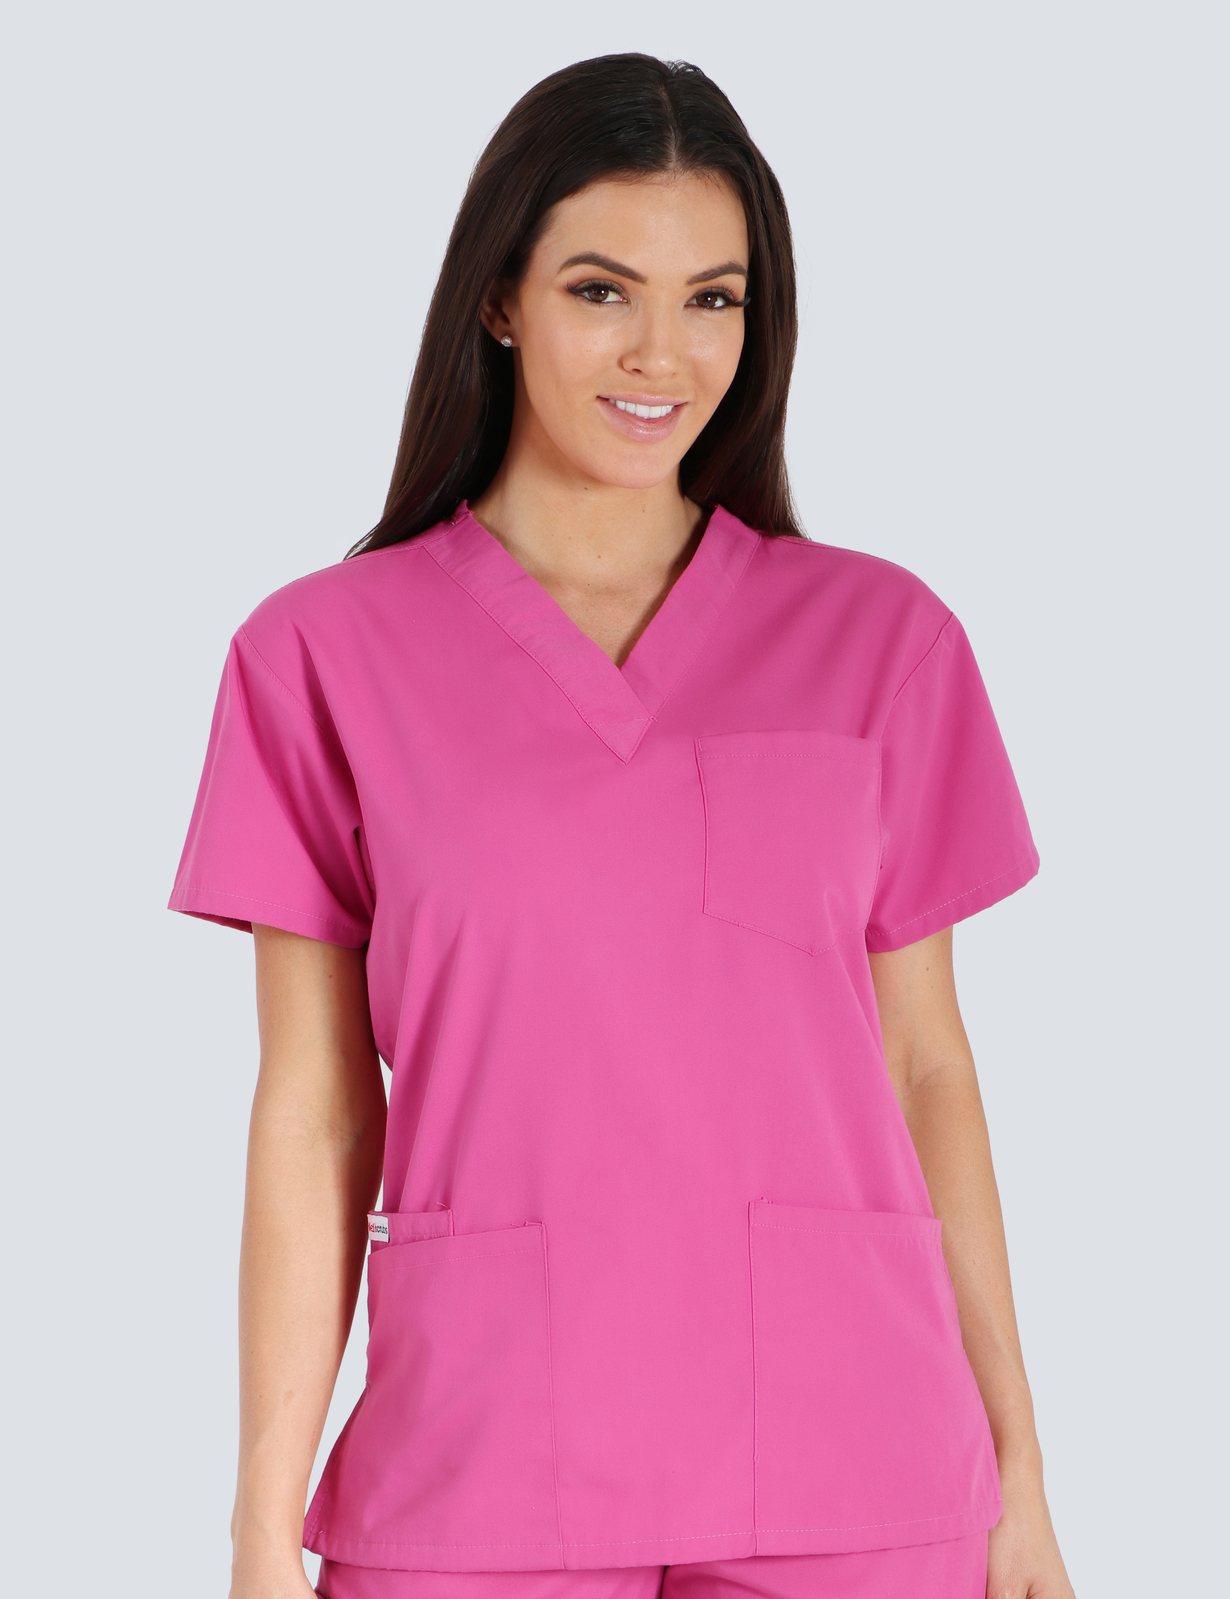 Queensland Children's Hospital Emergency Department Registered  Nurse  Uniform Top Bundle  (4 Pocket Top in Pink incl Logos)